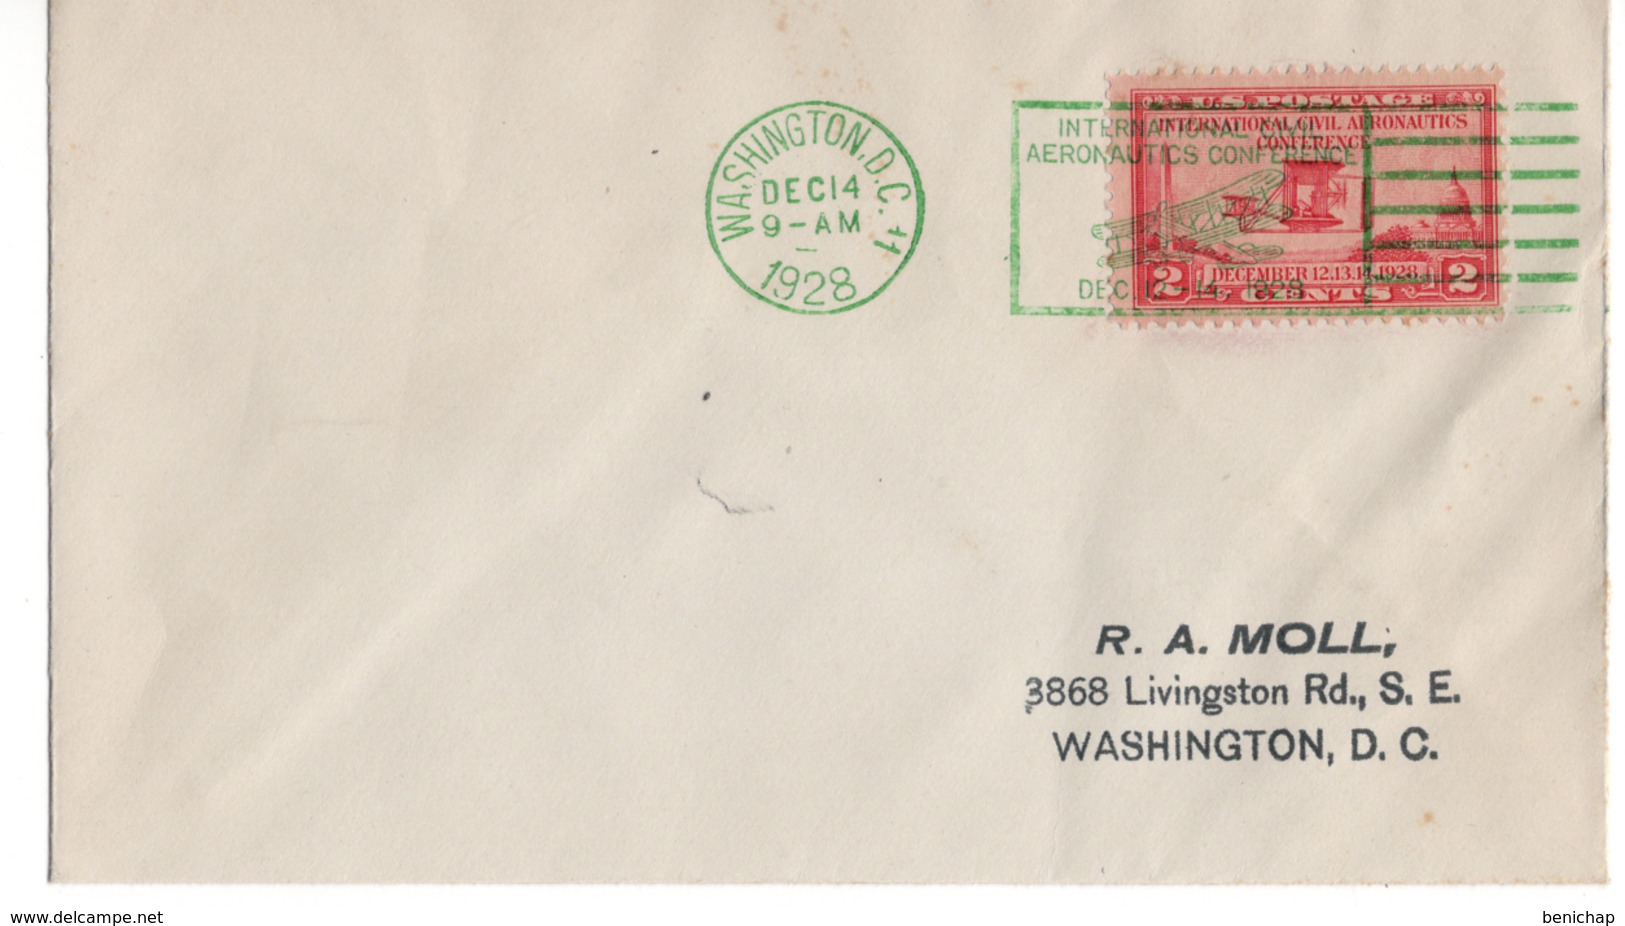 (R8) SCOTT 649 - AERONAUTICS CONFERENCE ISSUE - WRIGHT AIRPLANE - WASHINGTON D.C. - 1928 - GREEN CANCELLATION. - Schmuck-FDC